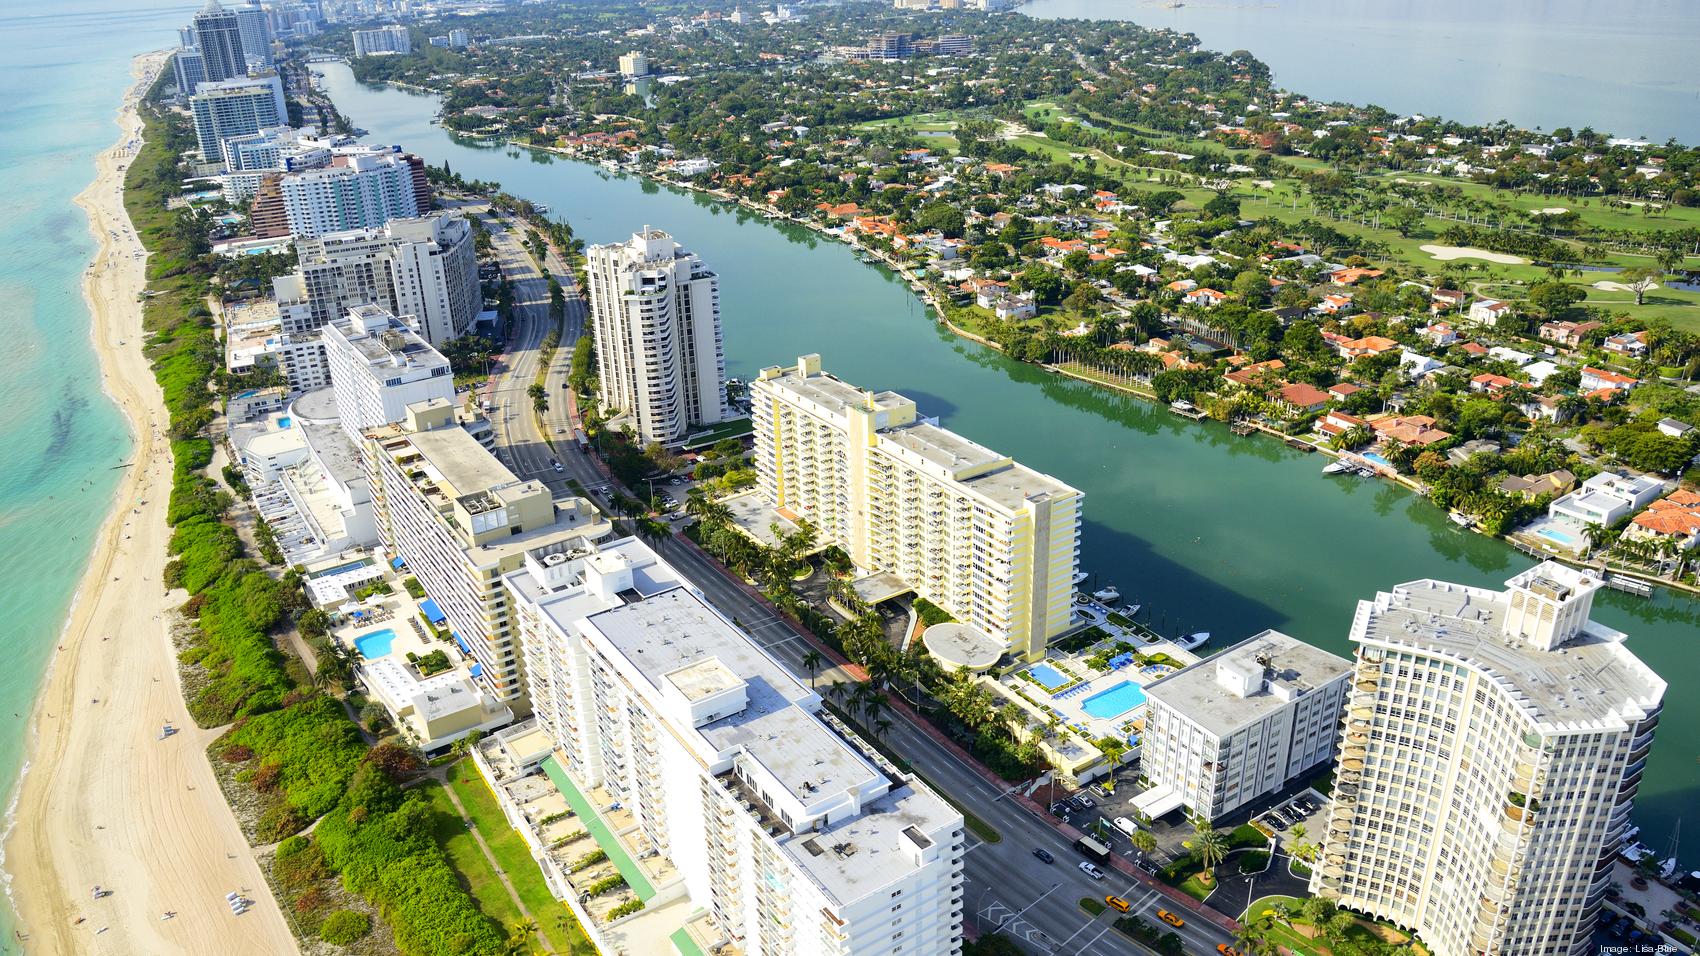 Moss Tackles Tough Site for New Miami Beach Landmark